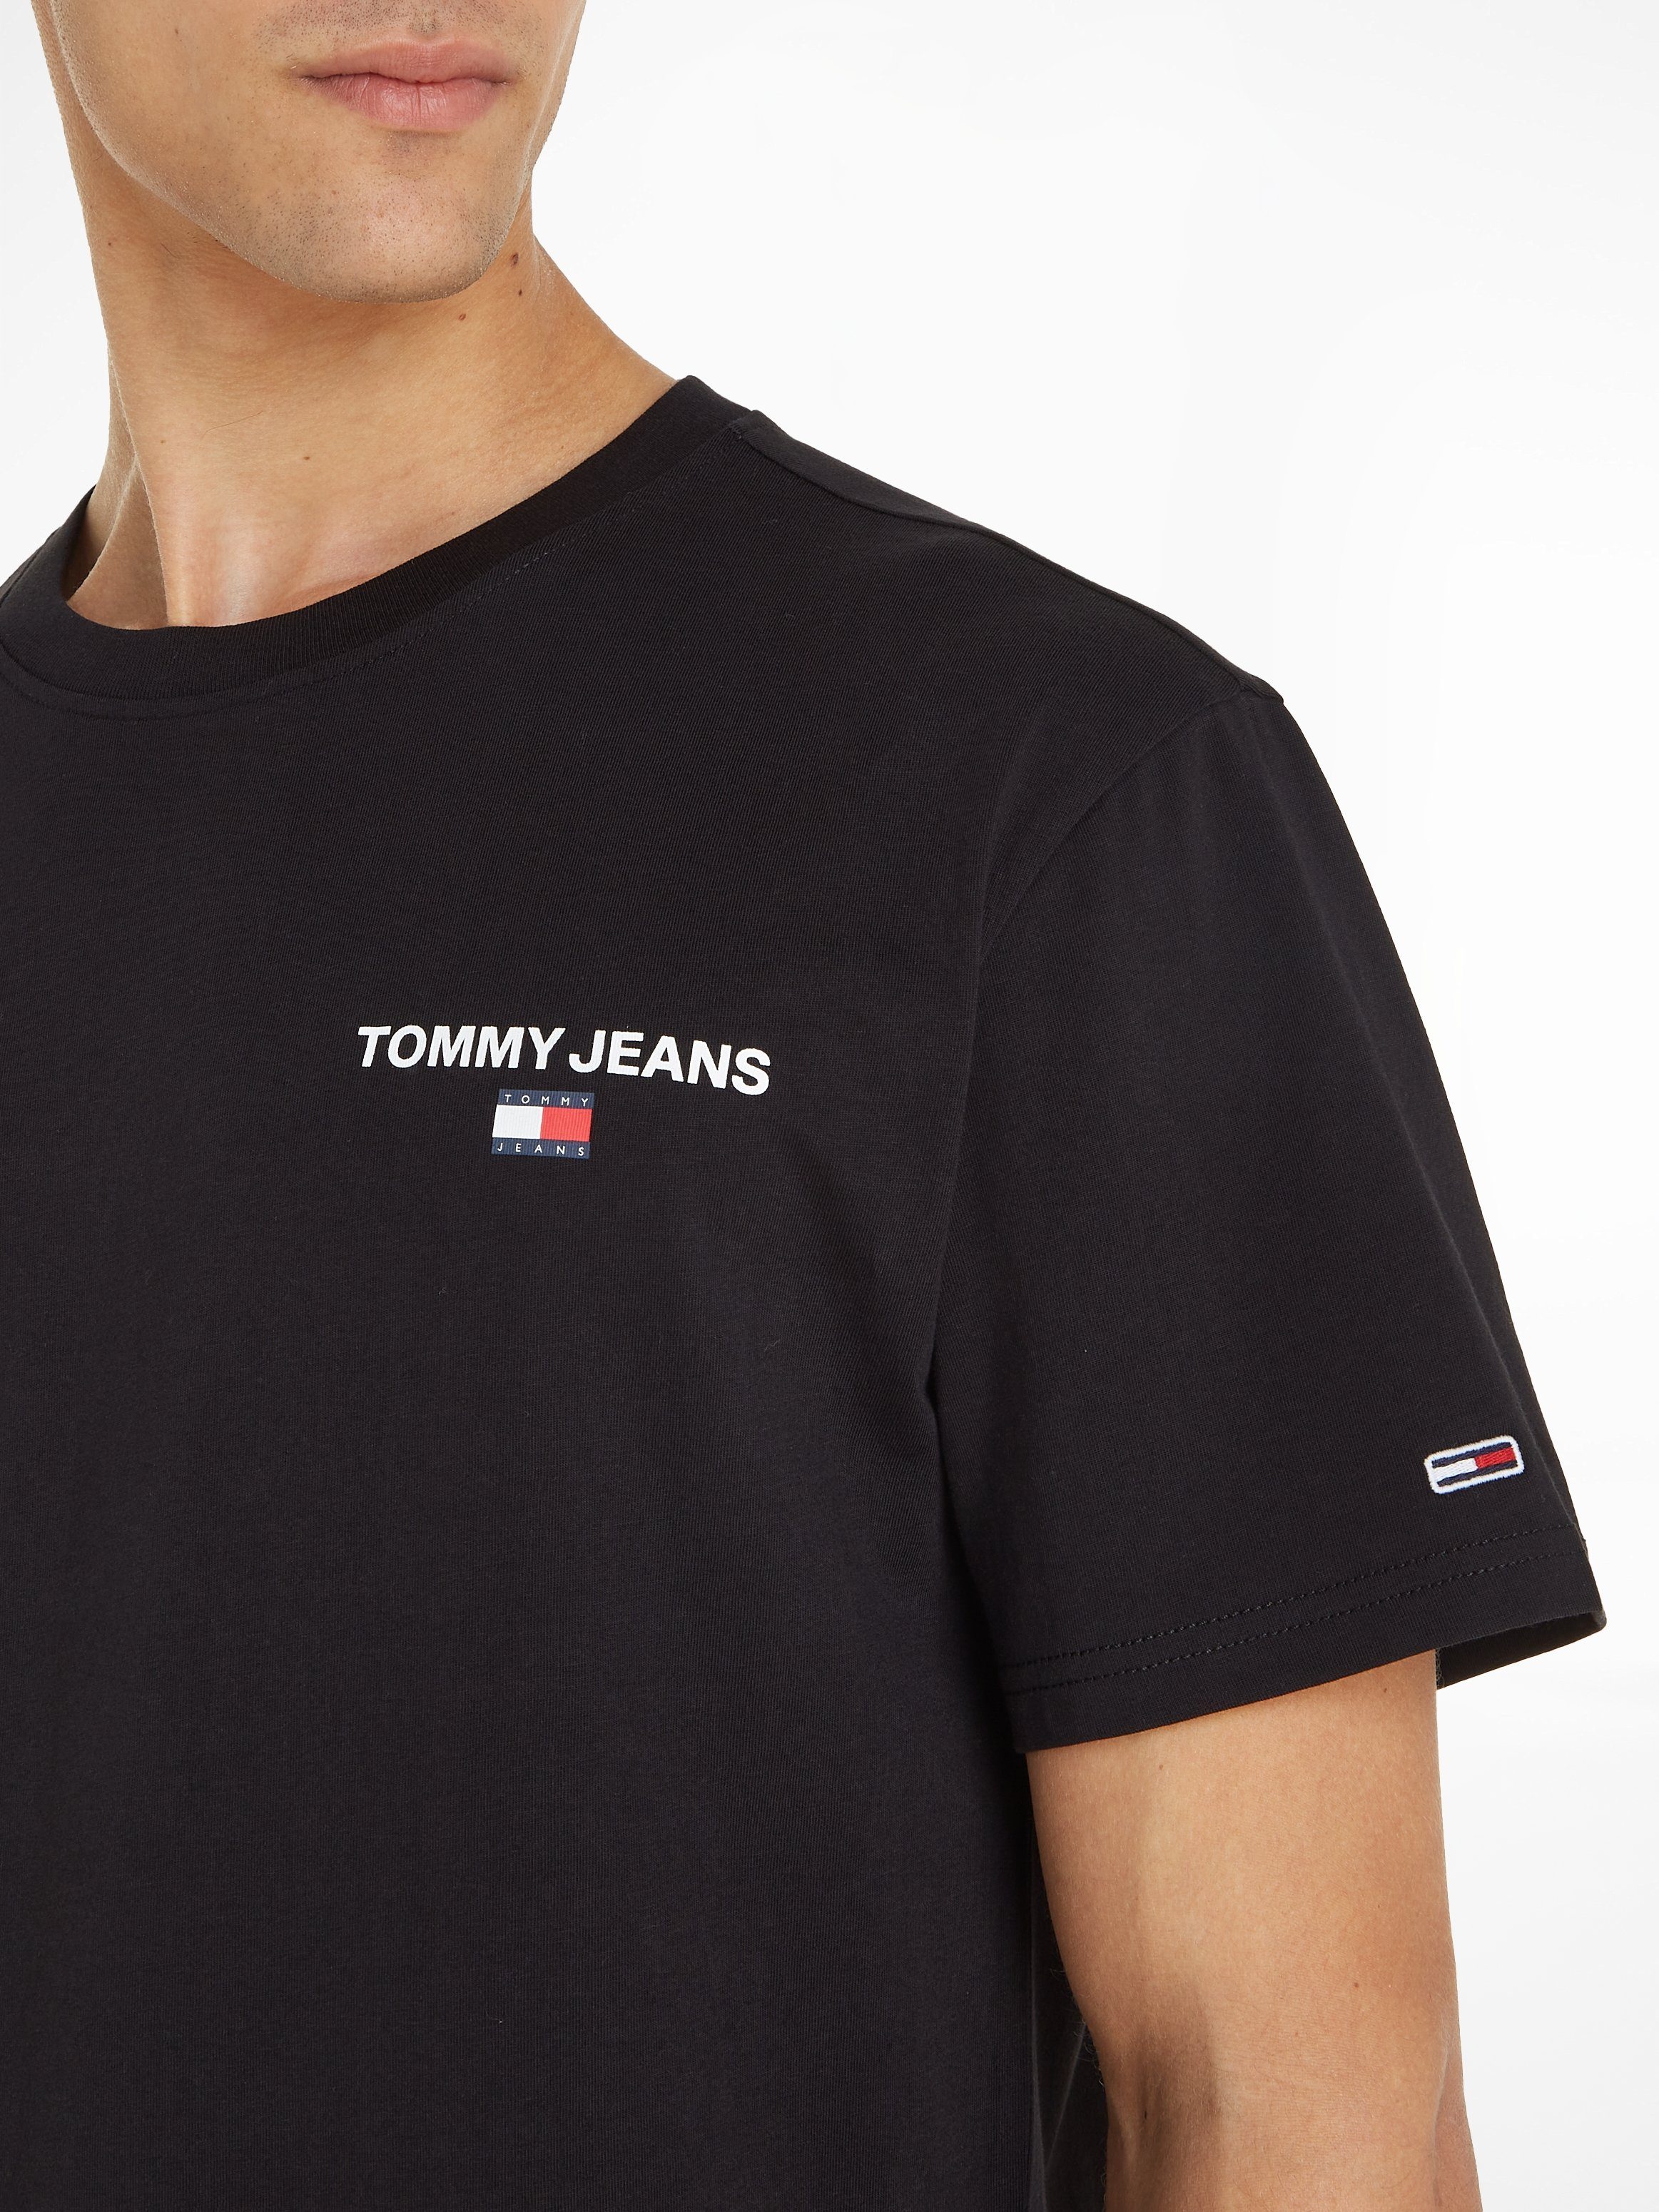 CLSC Tommy TJM Jeans TEE LINEAR PRINT T-Shirt Black BACK